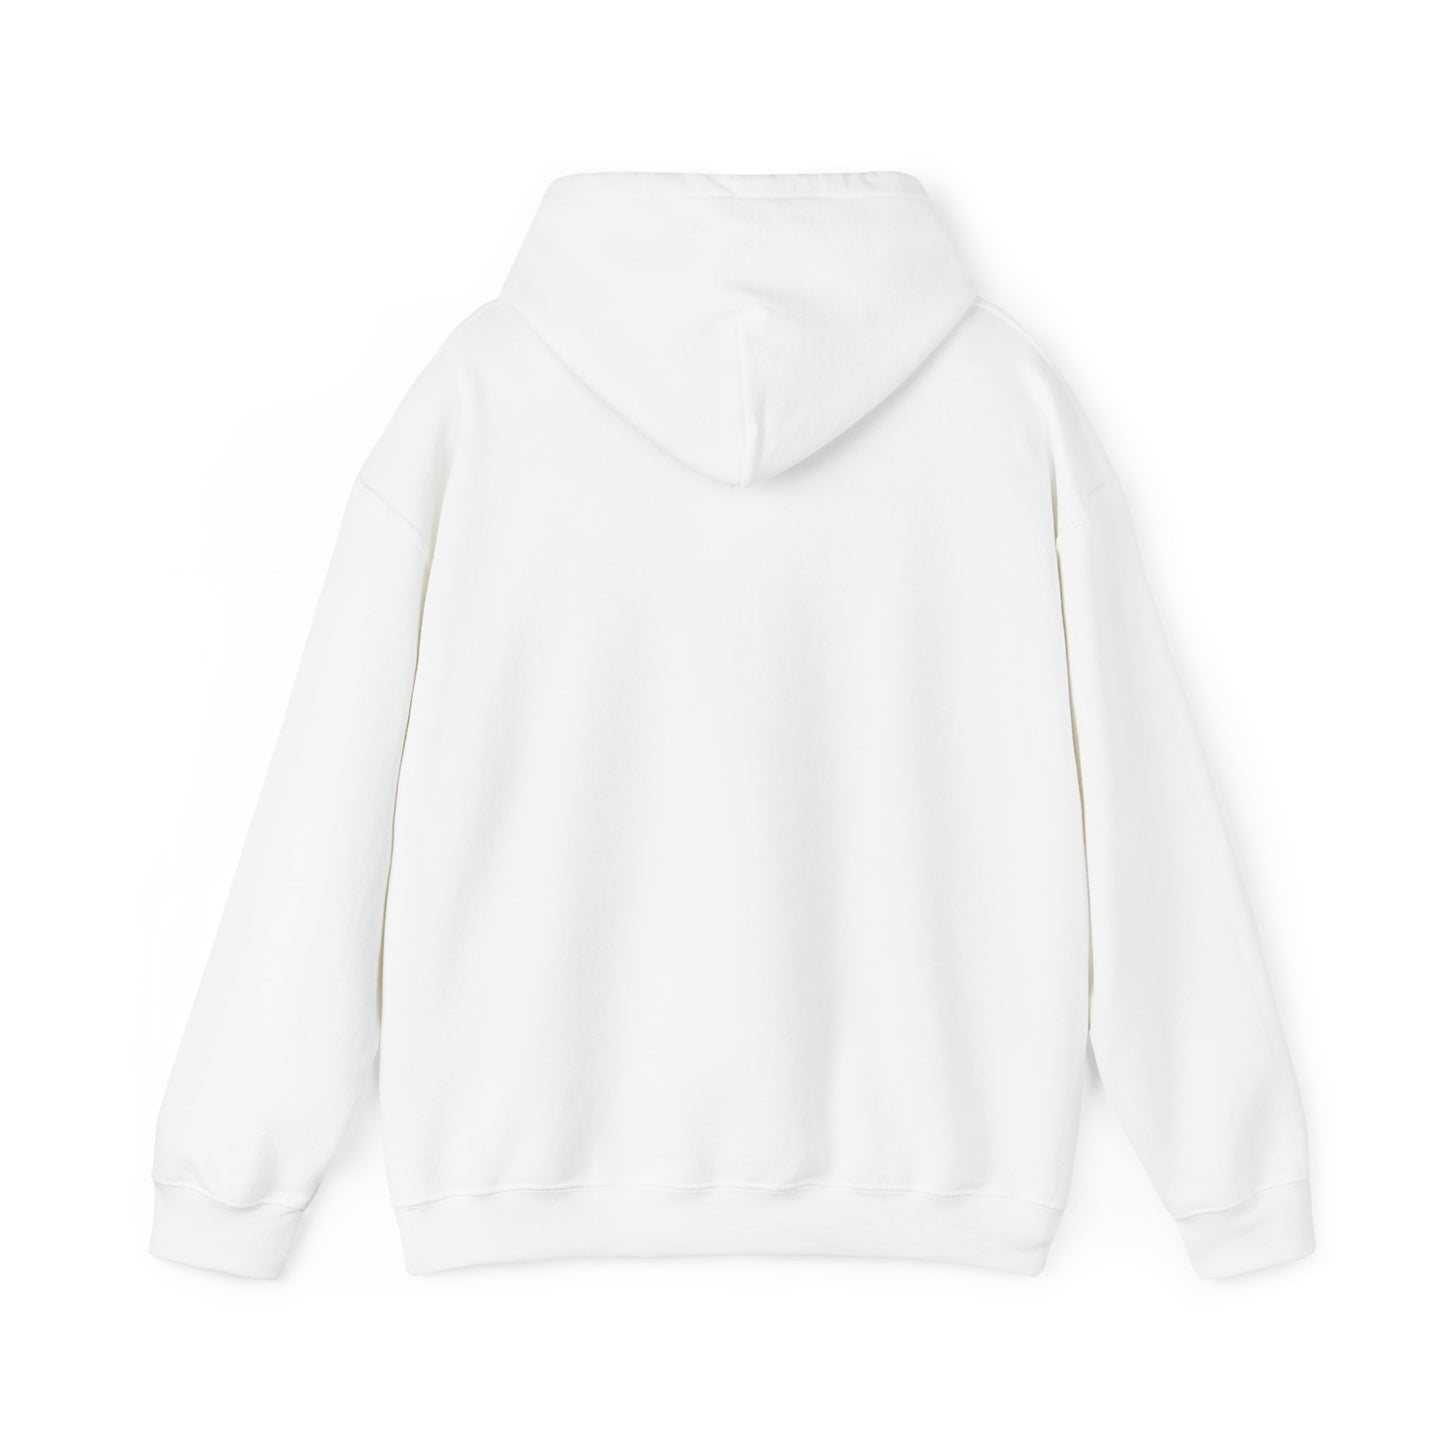 Hoodie, Archie the Axolotl Unisex Heavy Blend™ Hooded Sweatshirt